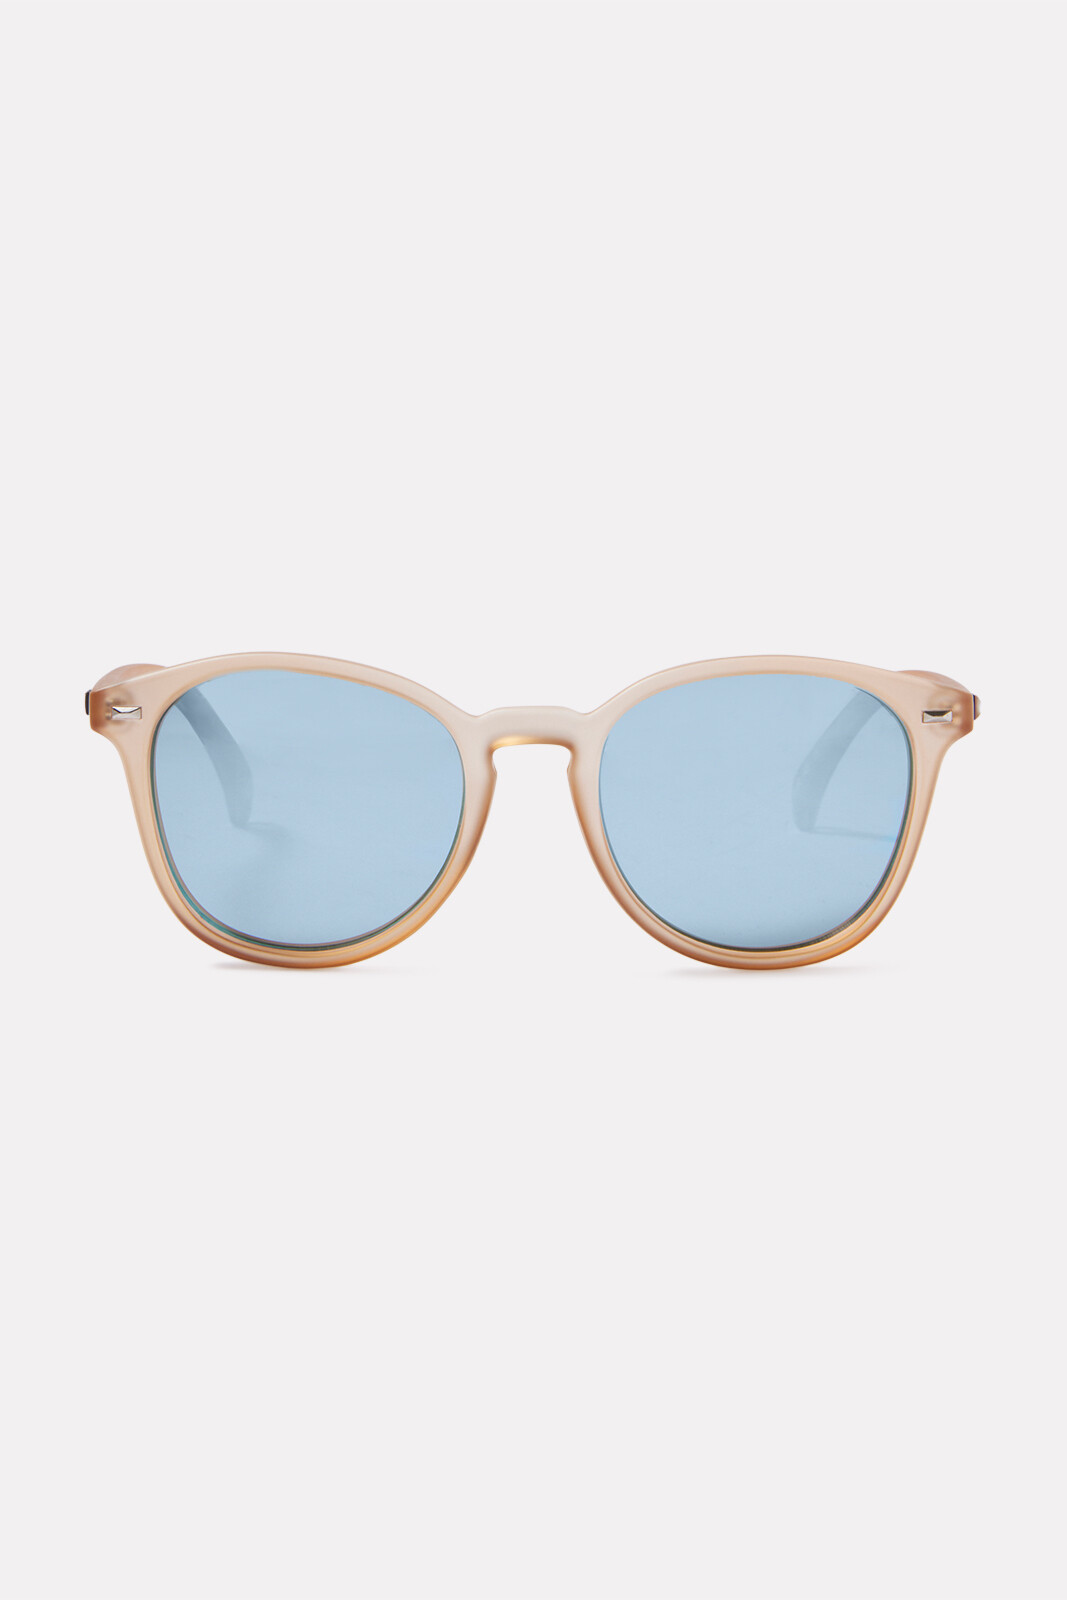 Le Specs Black Tort Bandwagon Sunglasses - Meghan Markle's Accessories -  Meghan's Fashion